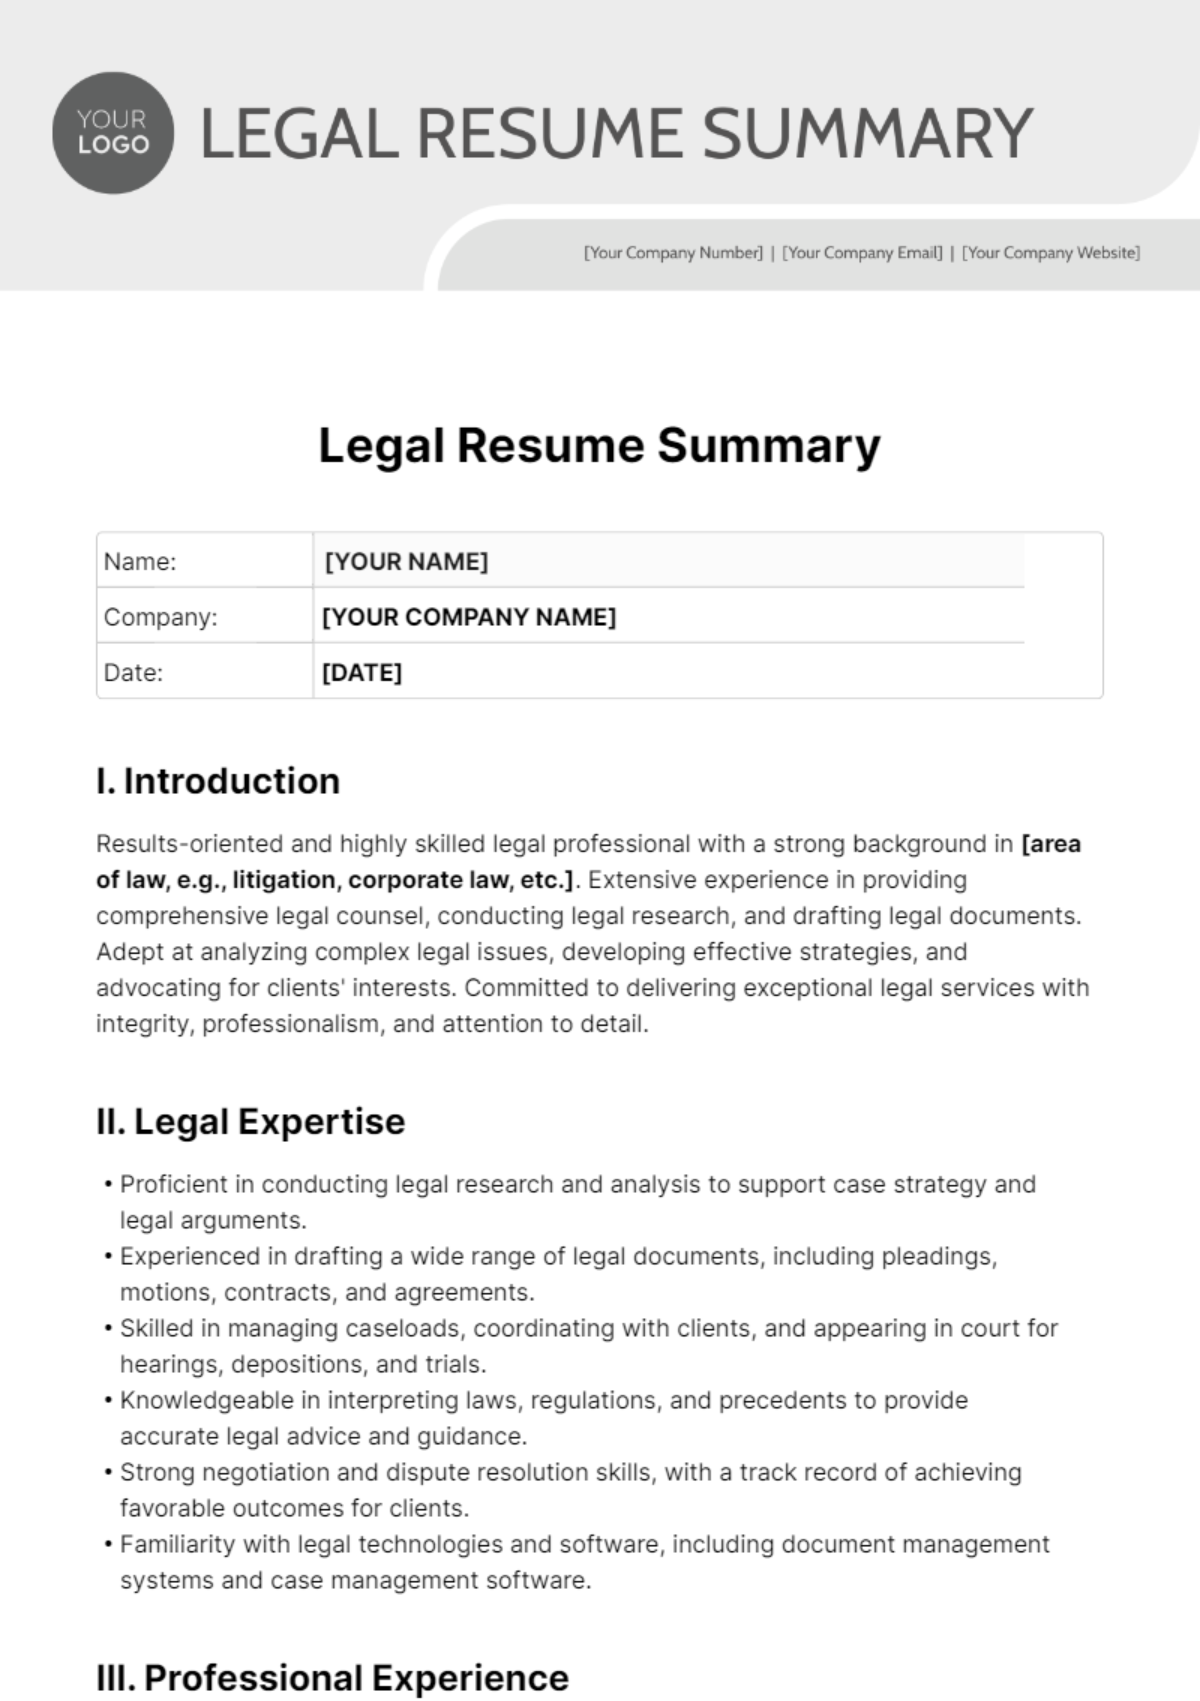 Free Legal Resume Summary Template 